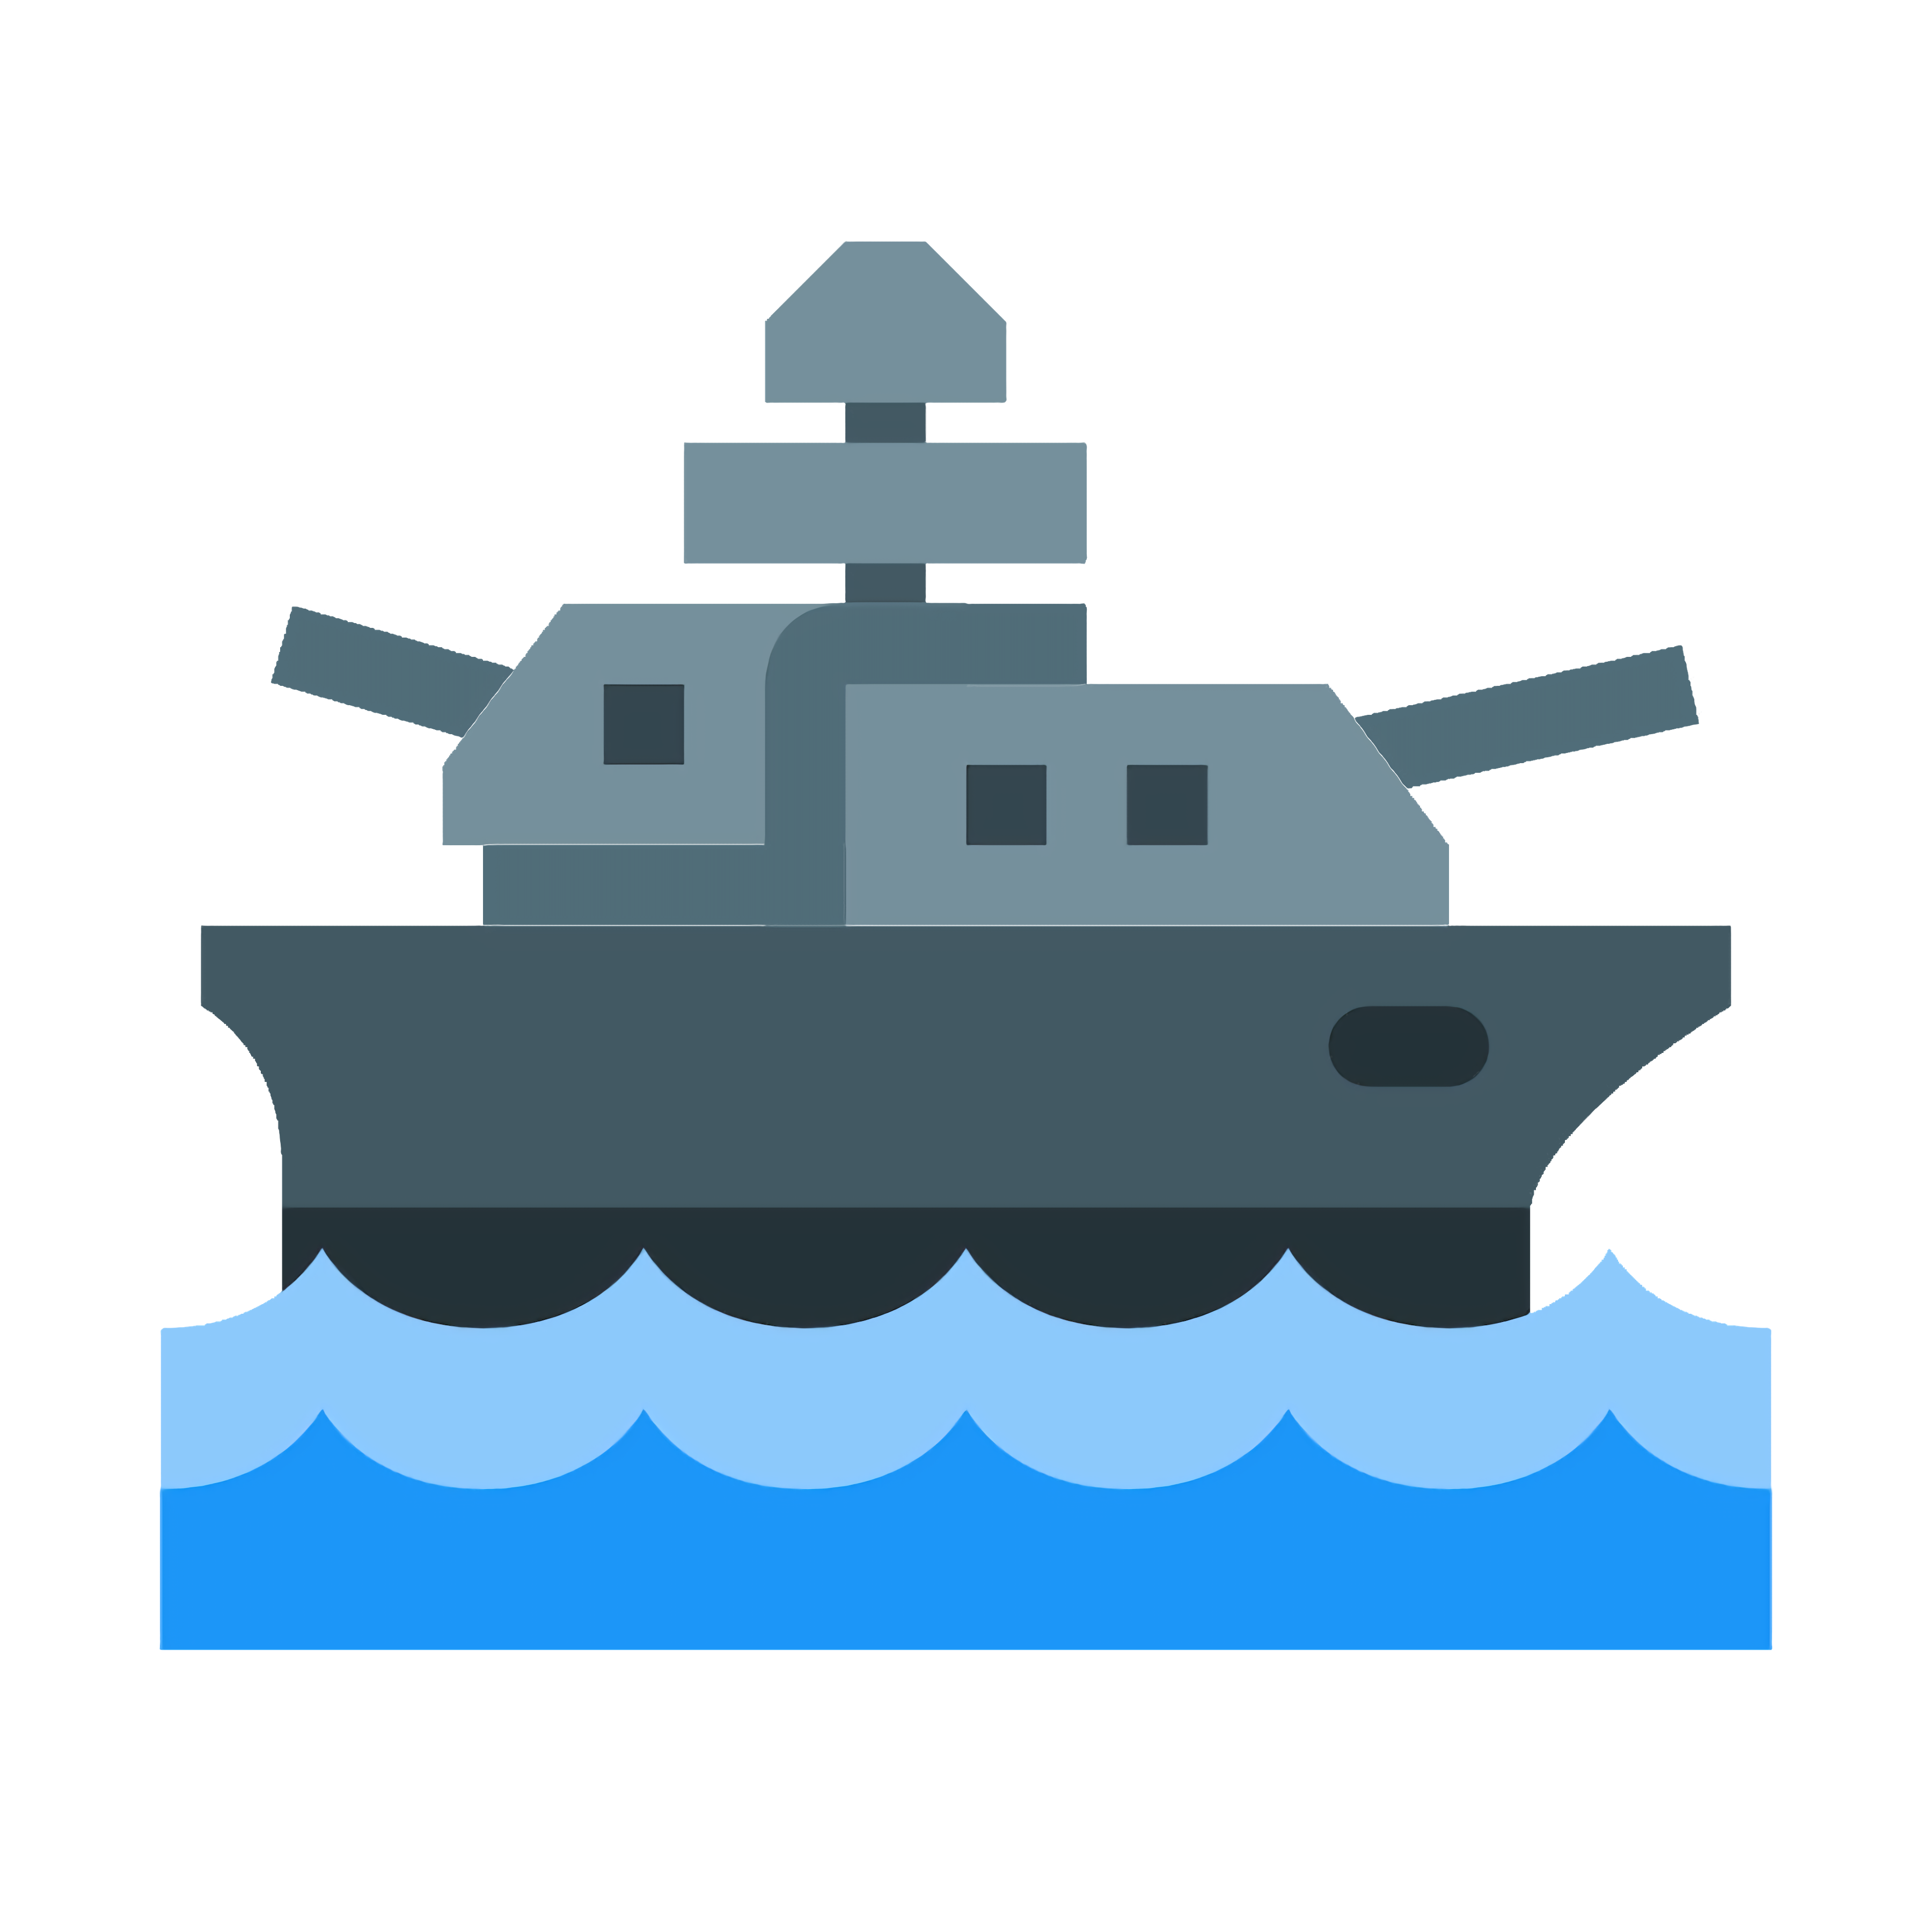 free online battleship games 2 player